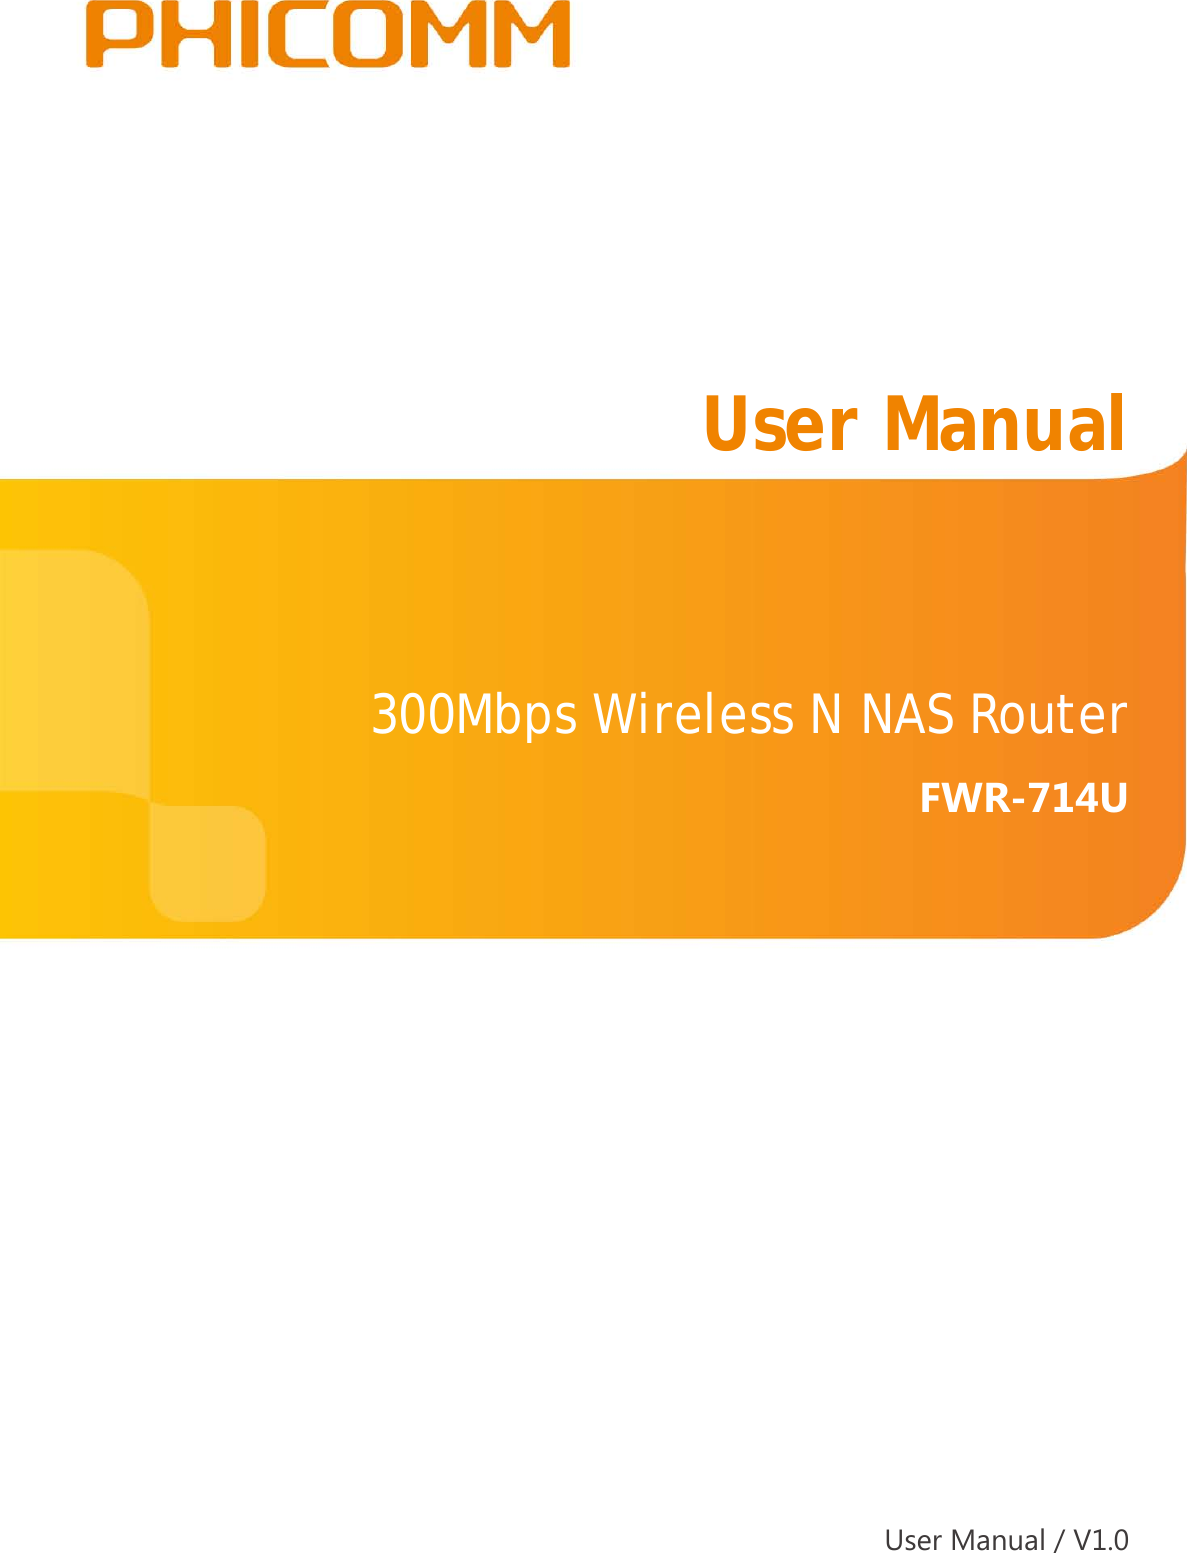                                                            300Mbps Wireless N NAS Router  FWR-714U  User Manual  User Manual / V1.0 